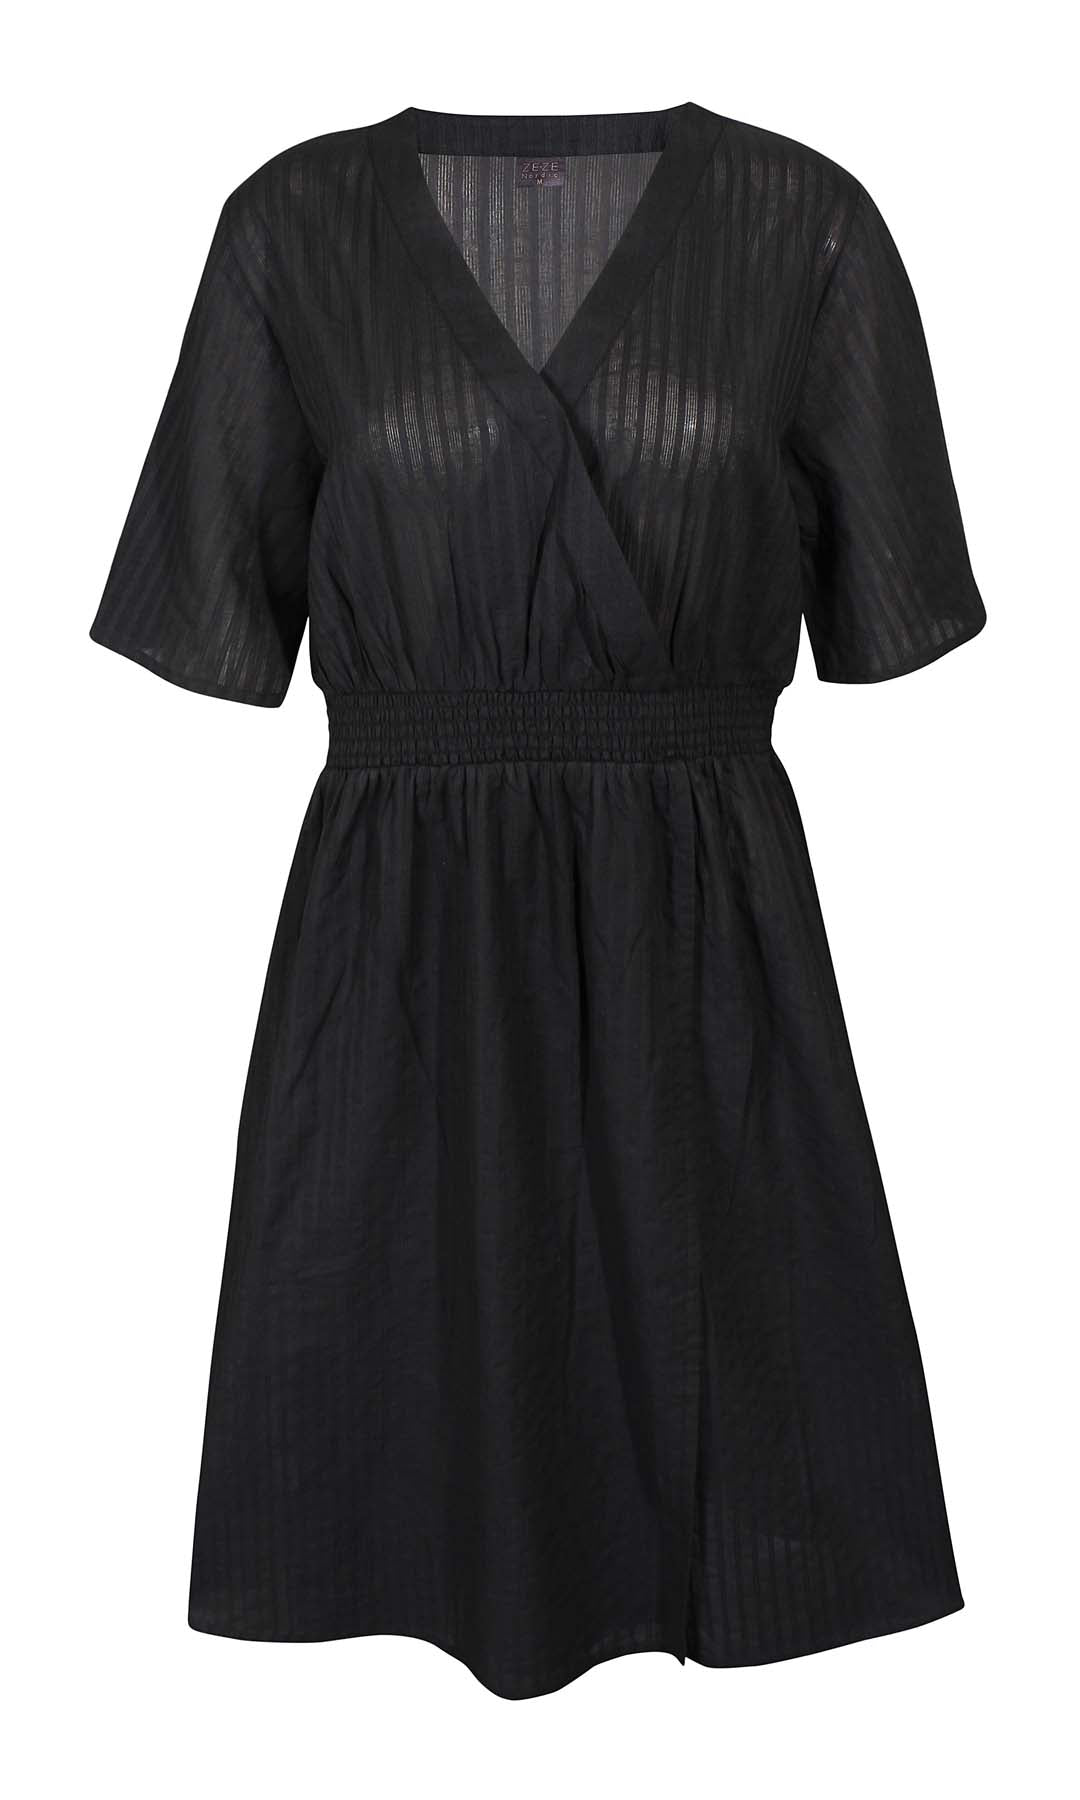 Faisa 164 - Black A-line Dress: Timeless Design with Elegant Finish| ZE-ZE